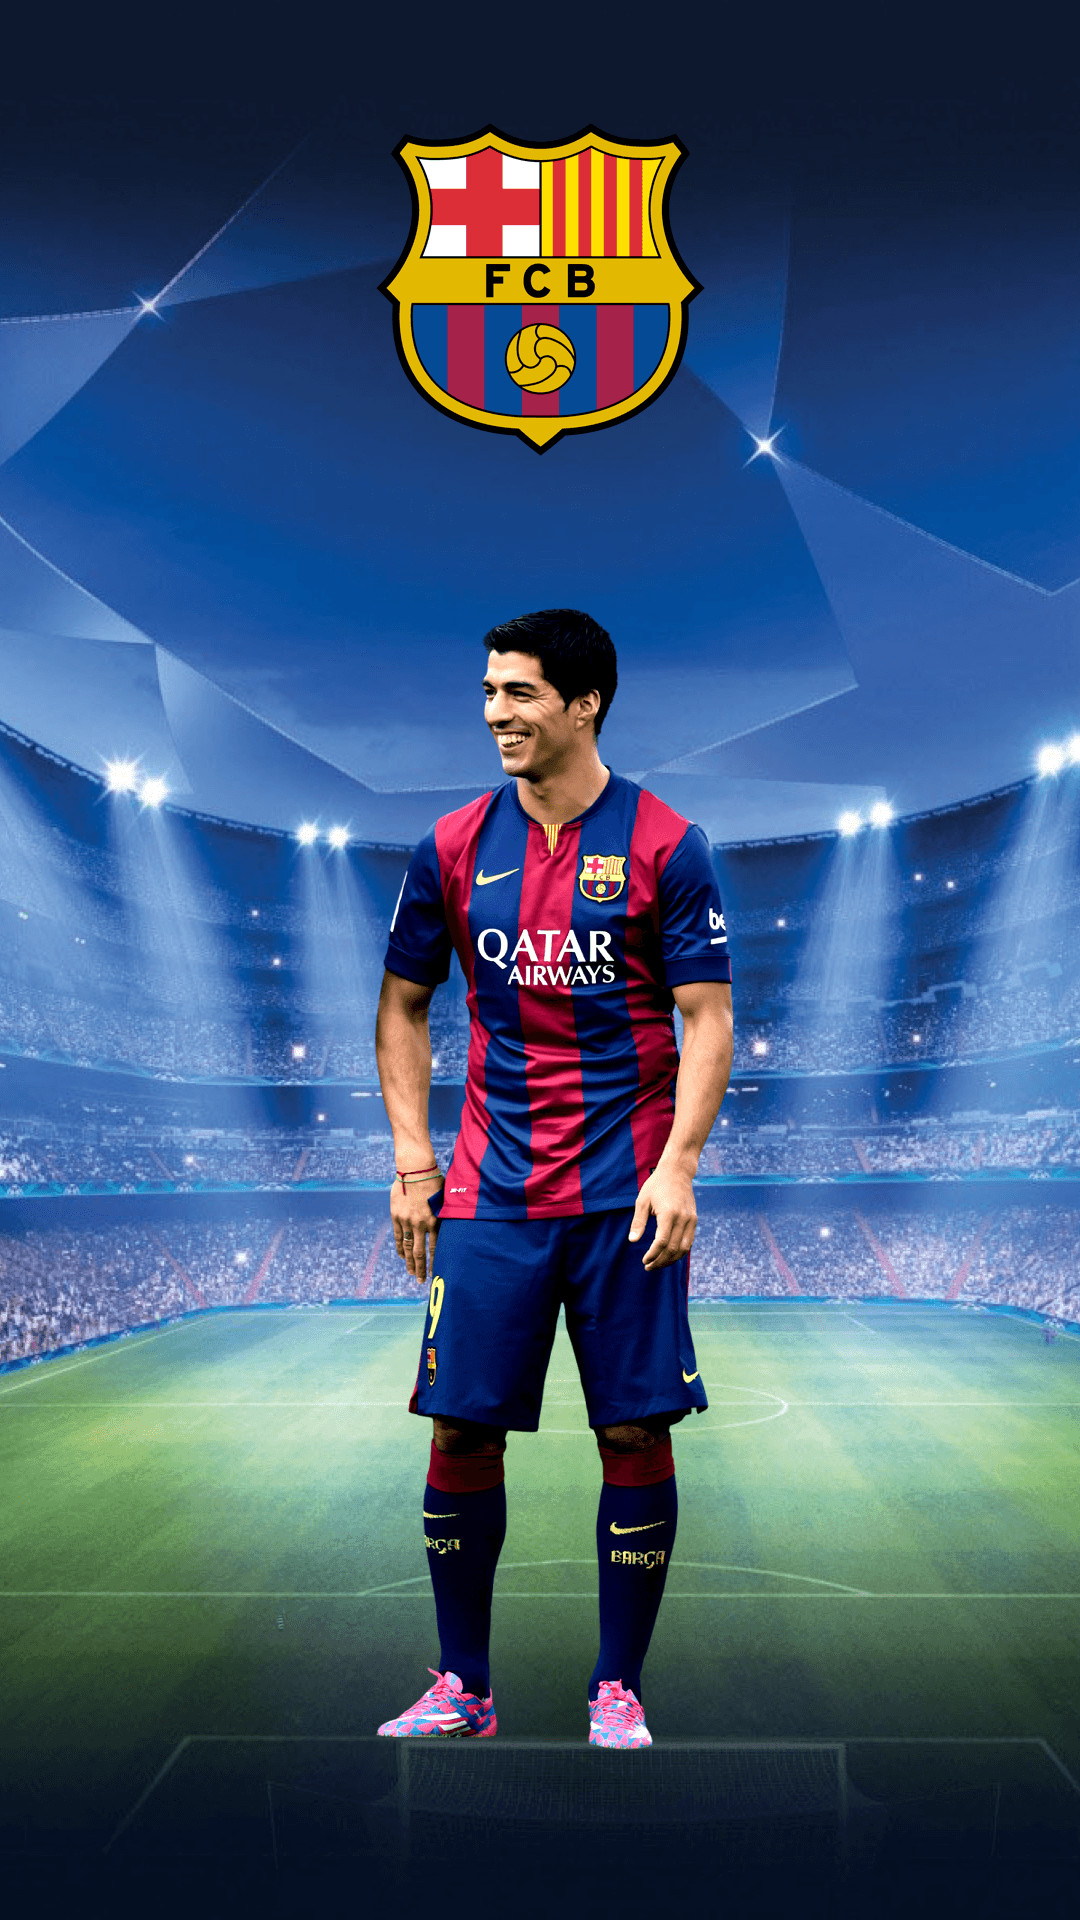 fc barcelona phone wallpaper,football player,soccer player,player,football,team sport